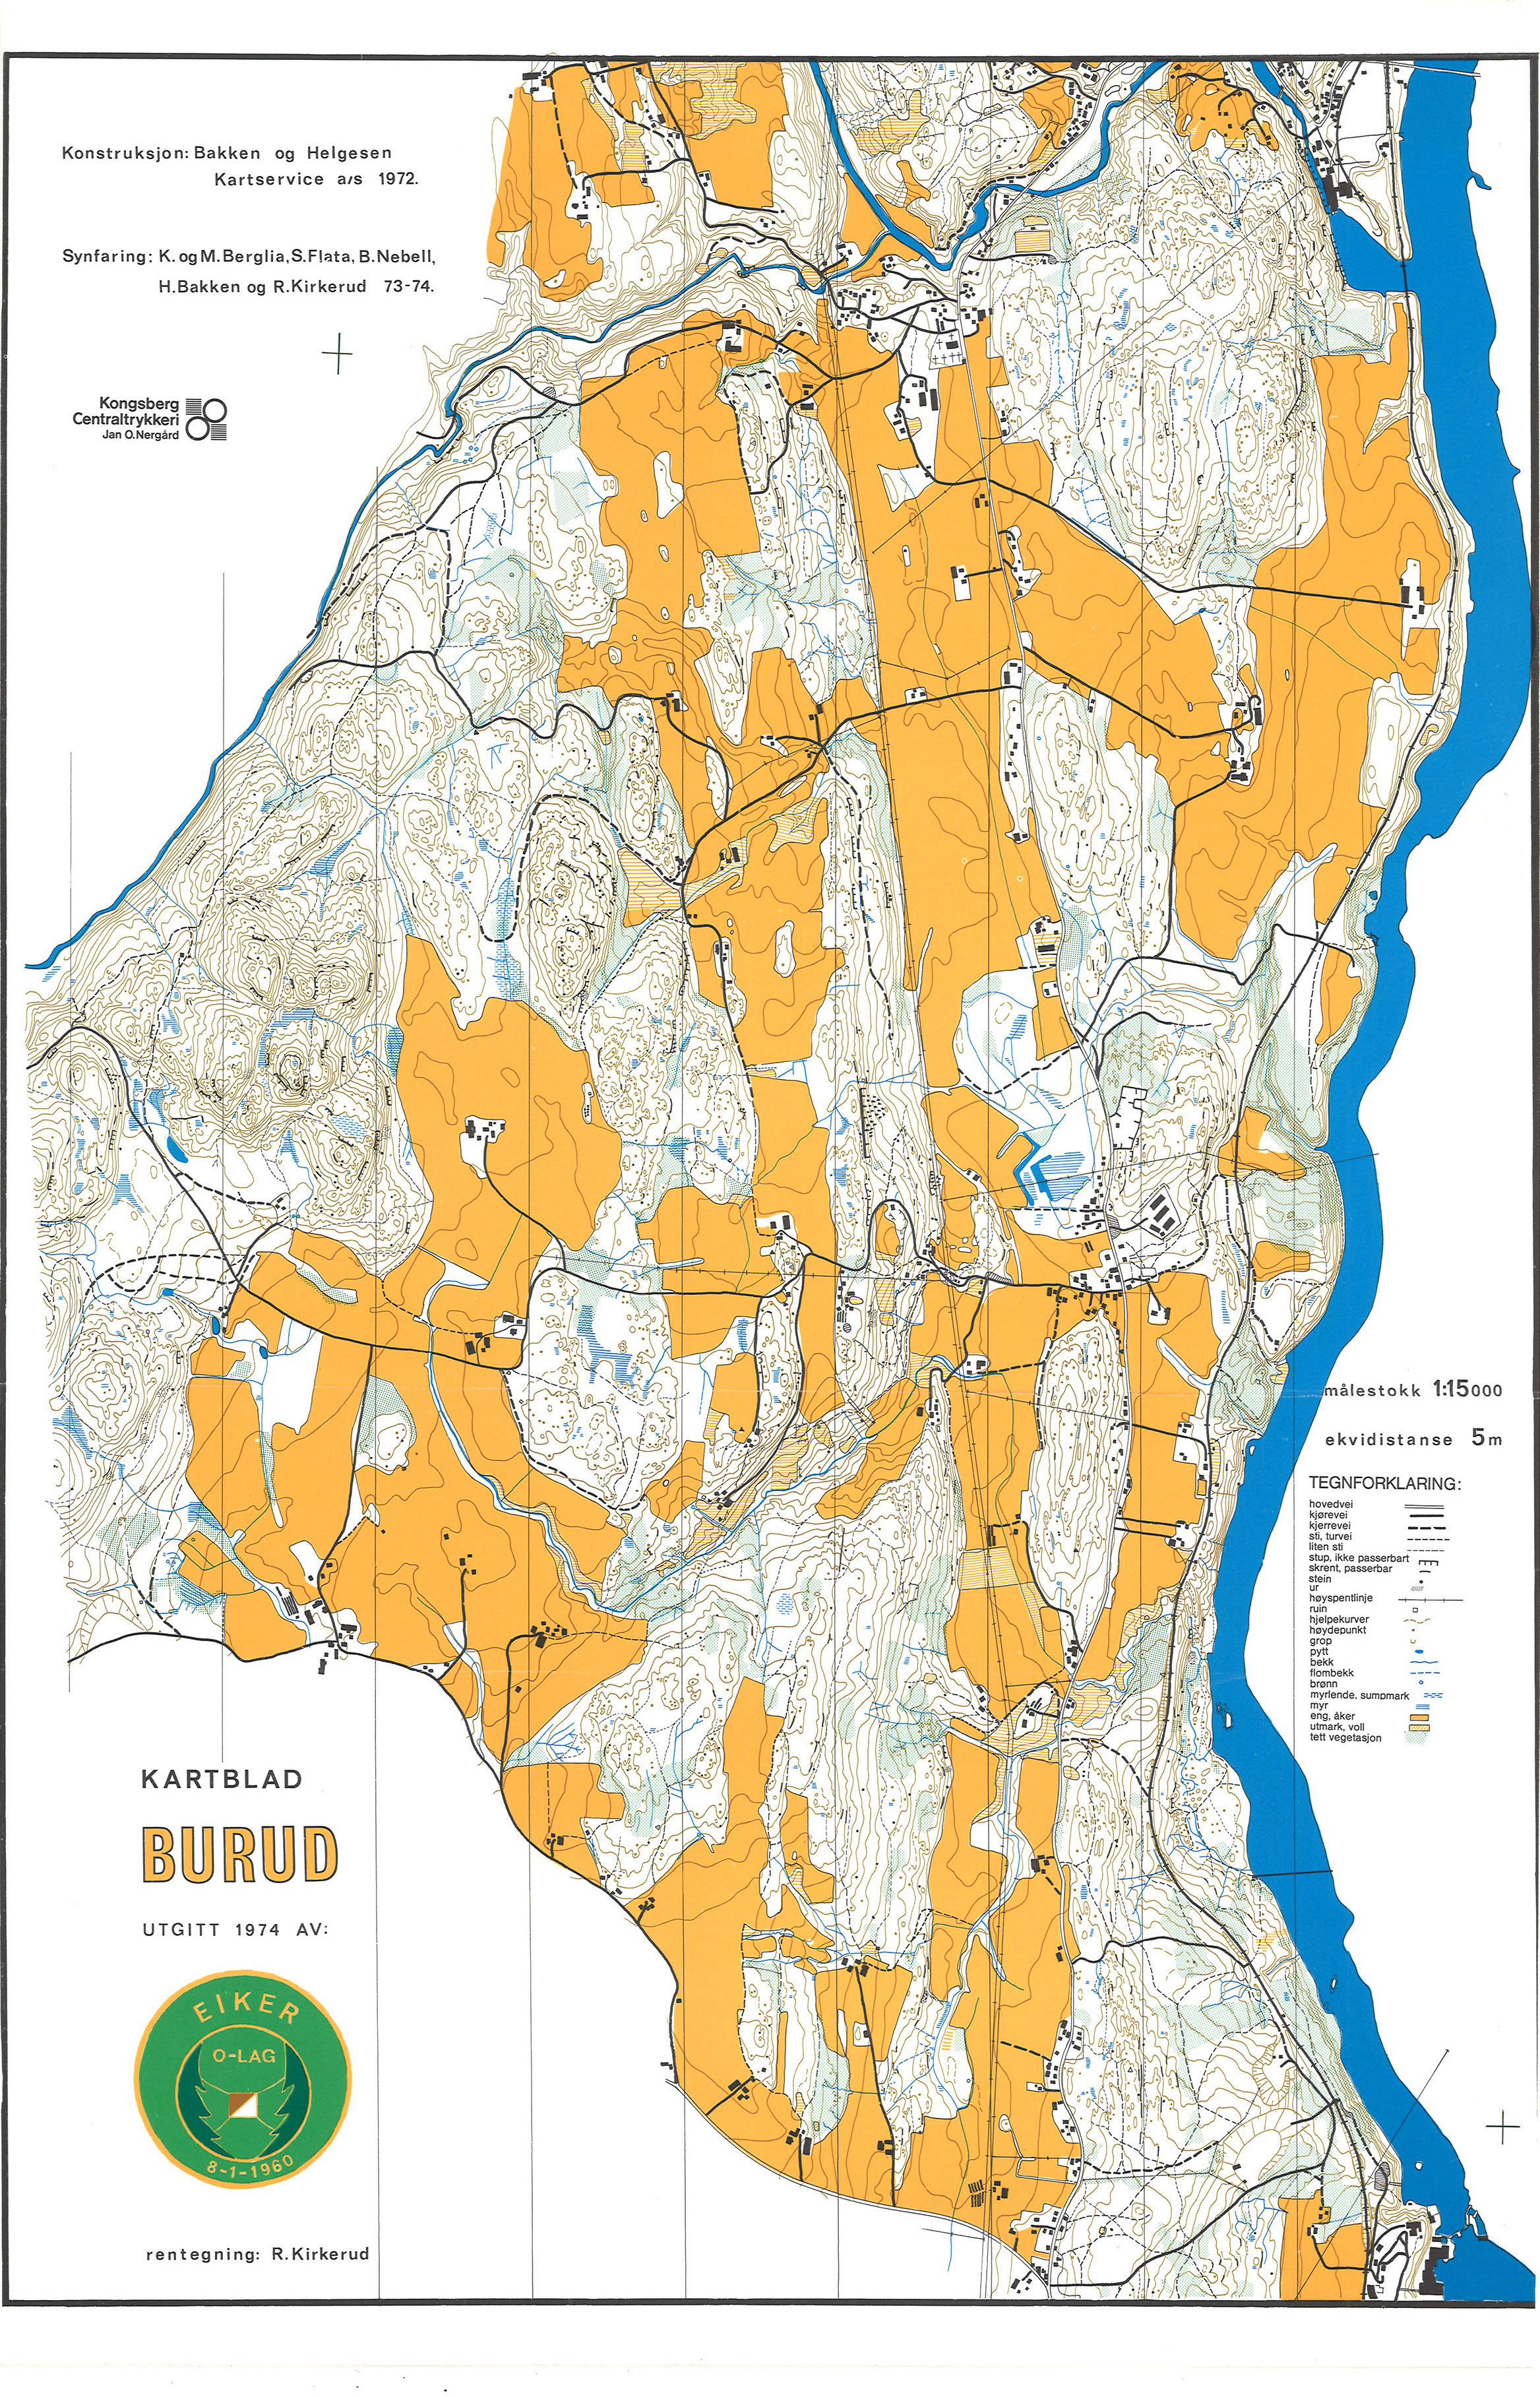 Burud (01.01.1974)